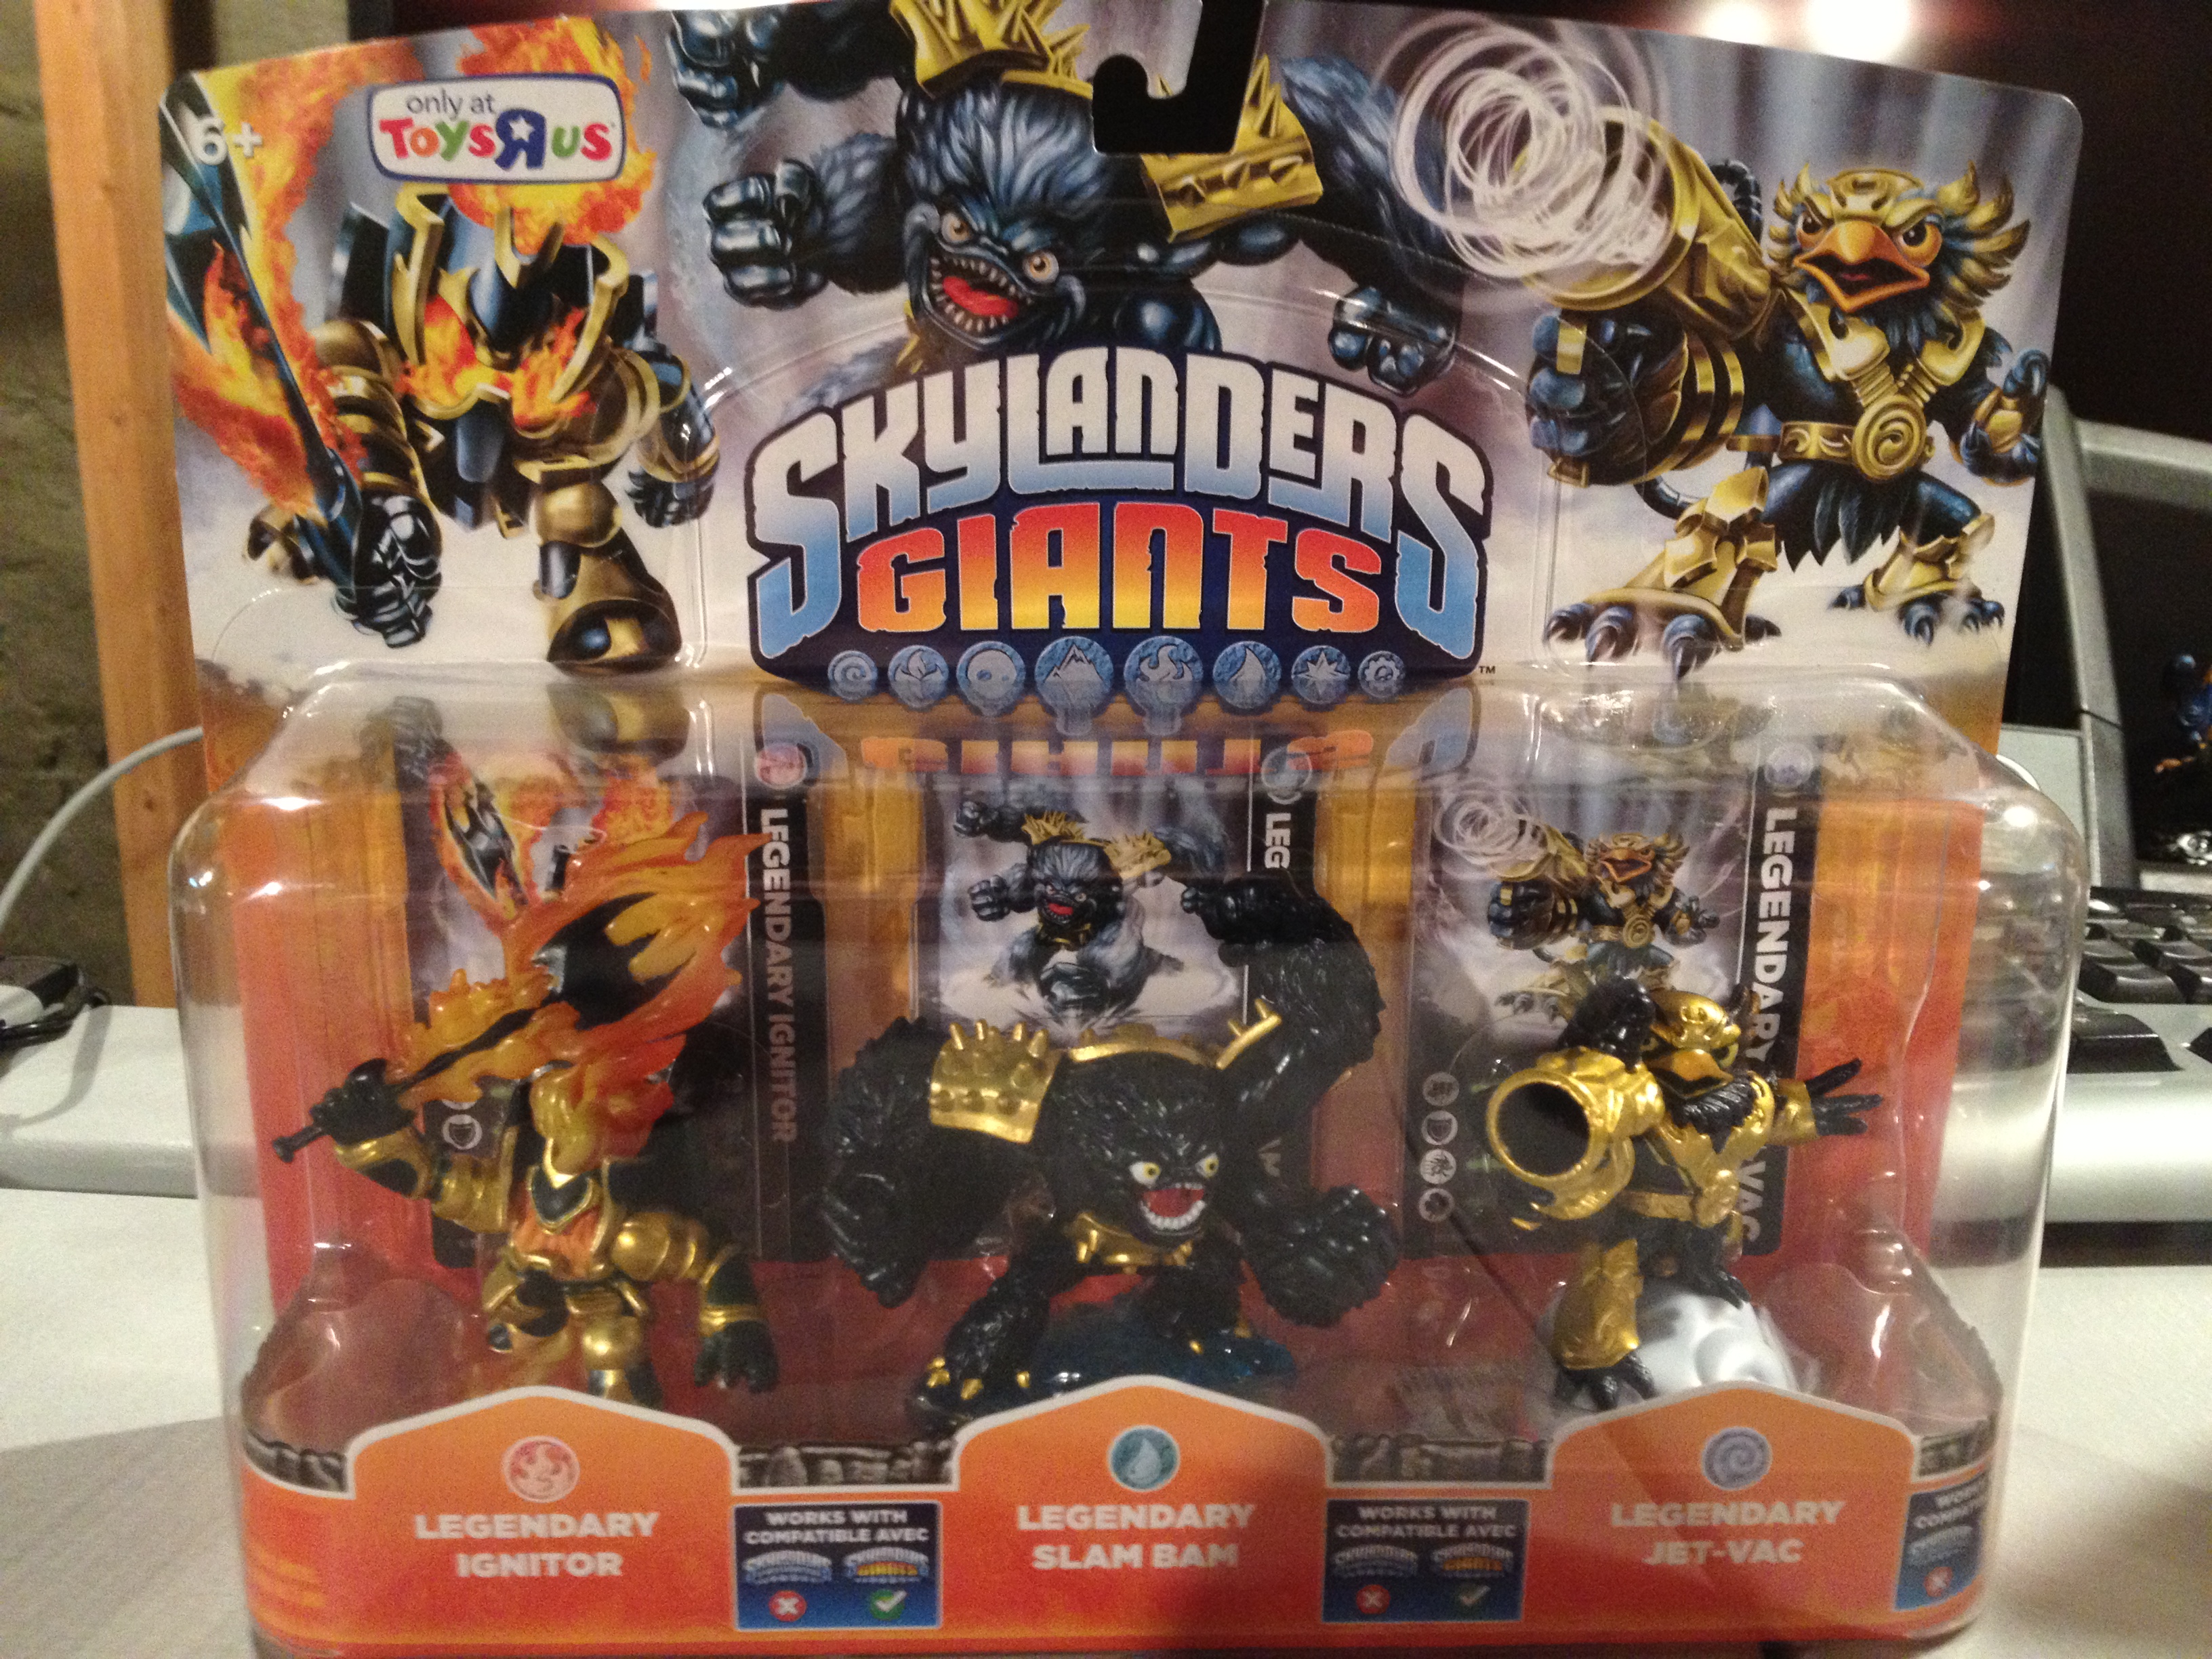 Legendary Skylanders Giants Figures - Slam Bam, Jet Vac and Ignitor